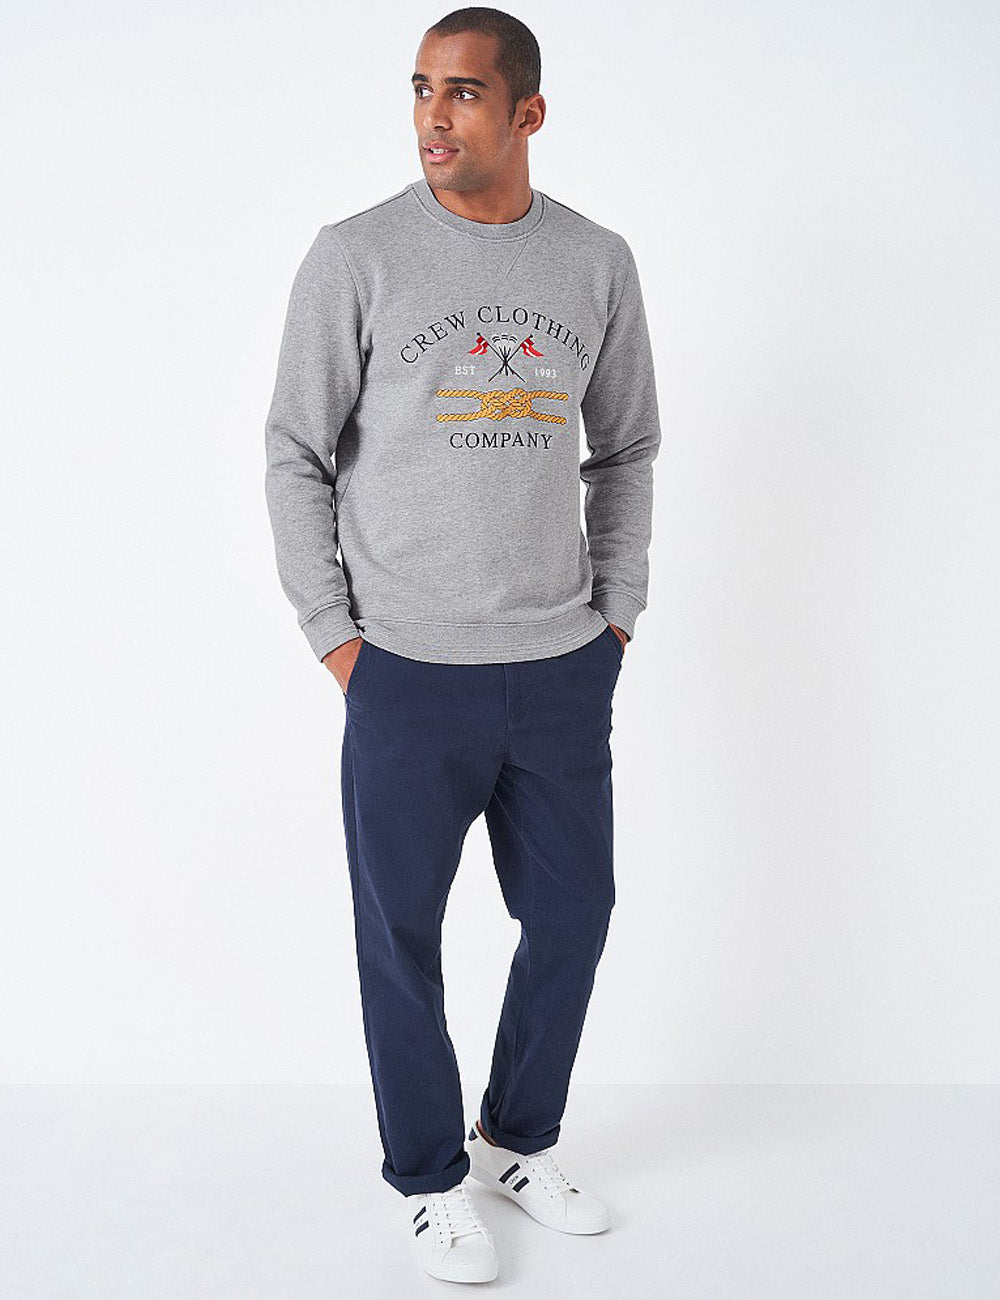 Crew Clothing Worbridge Crew Neck Sweatshirt - Grey